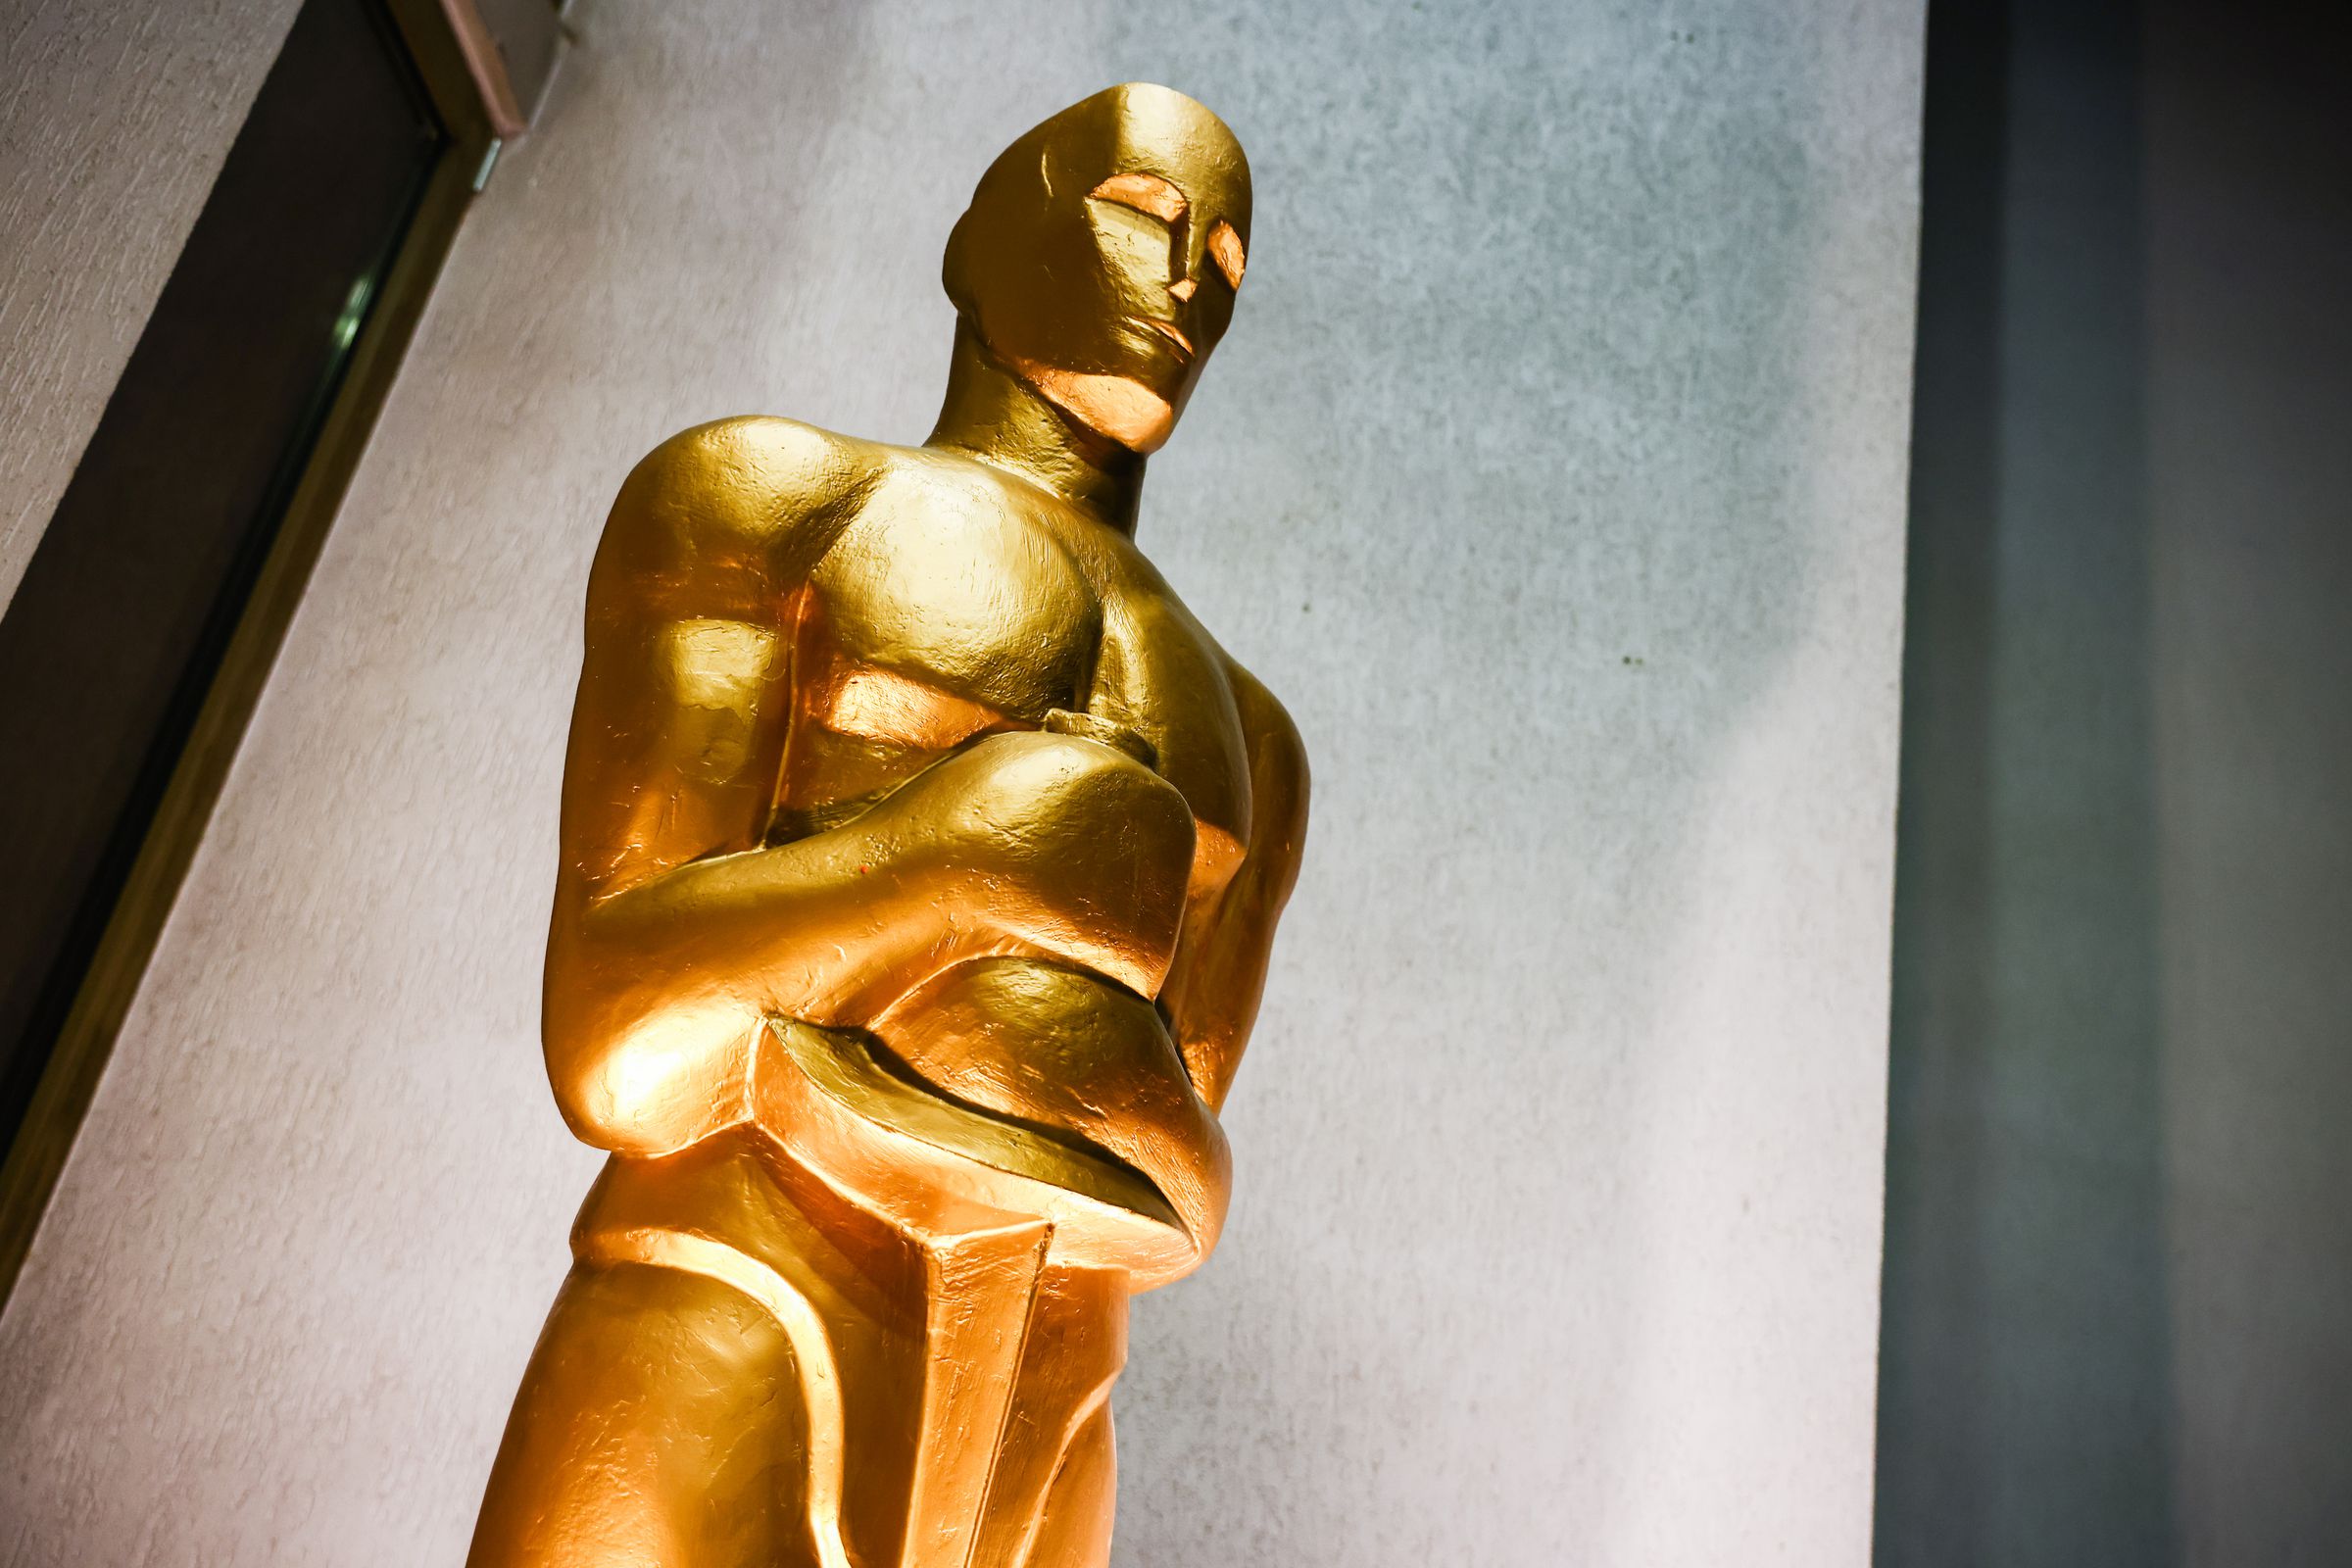 An image showing an Oscar award statue 